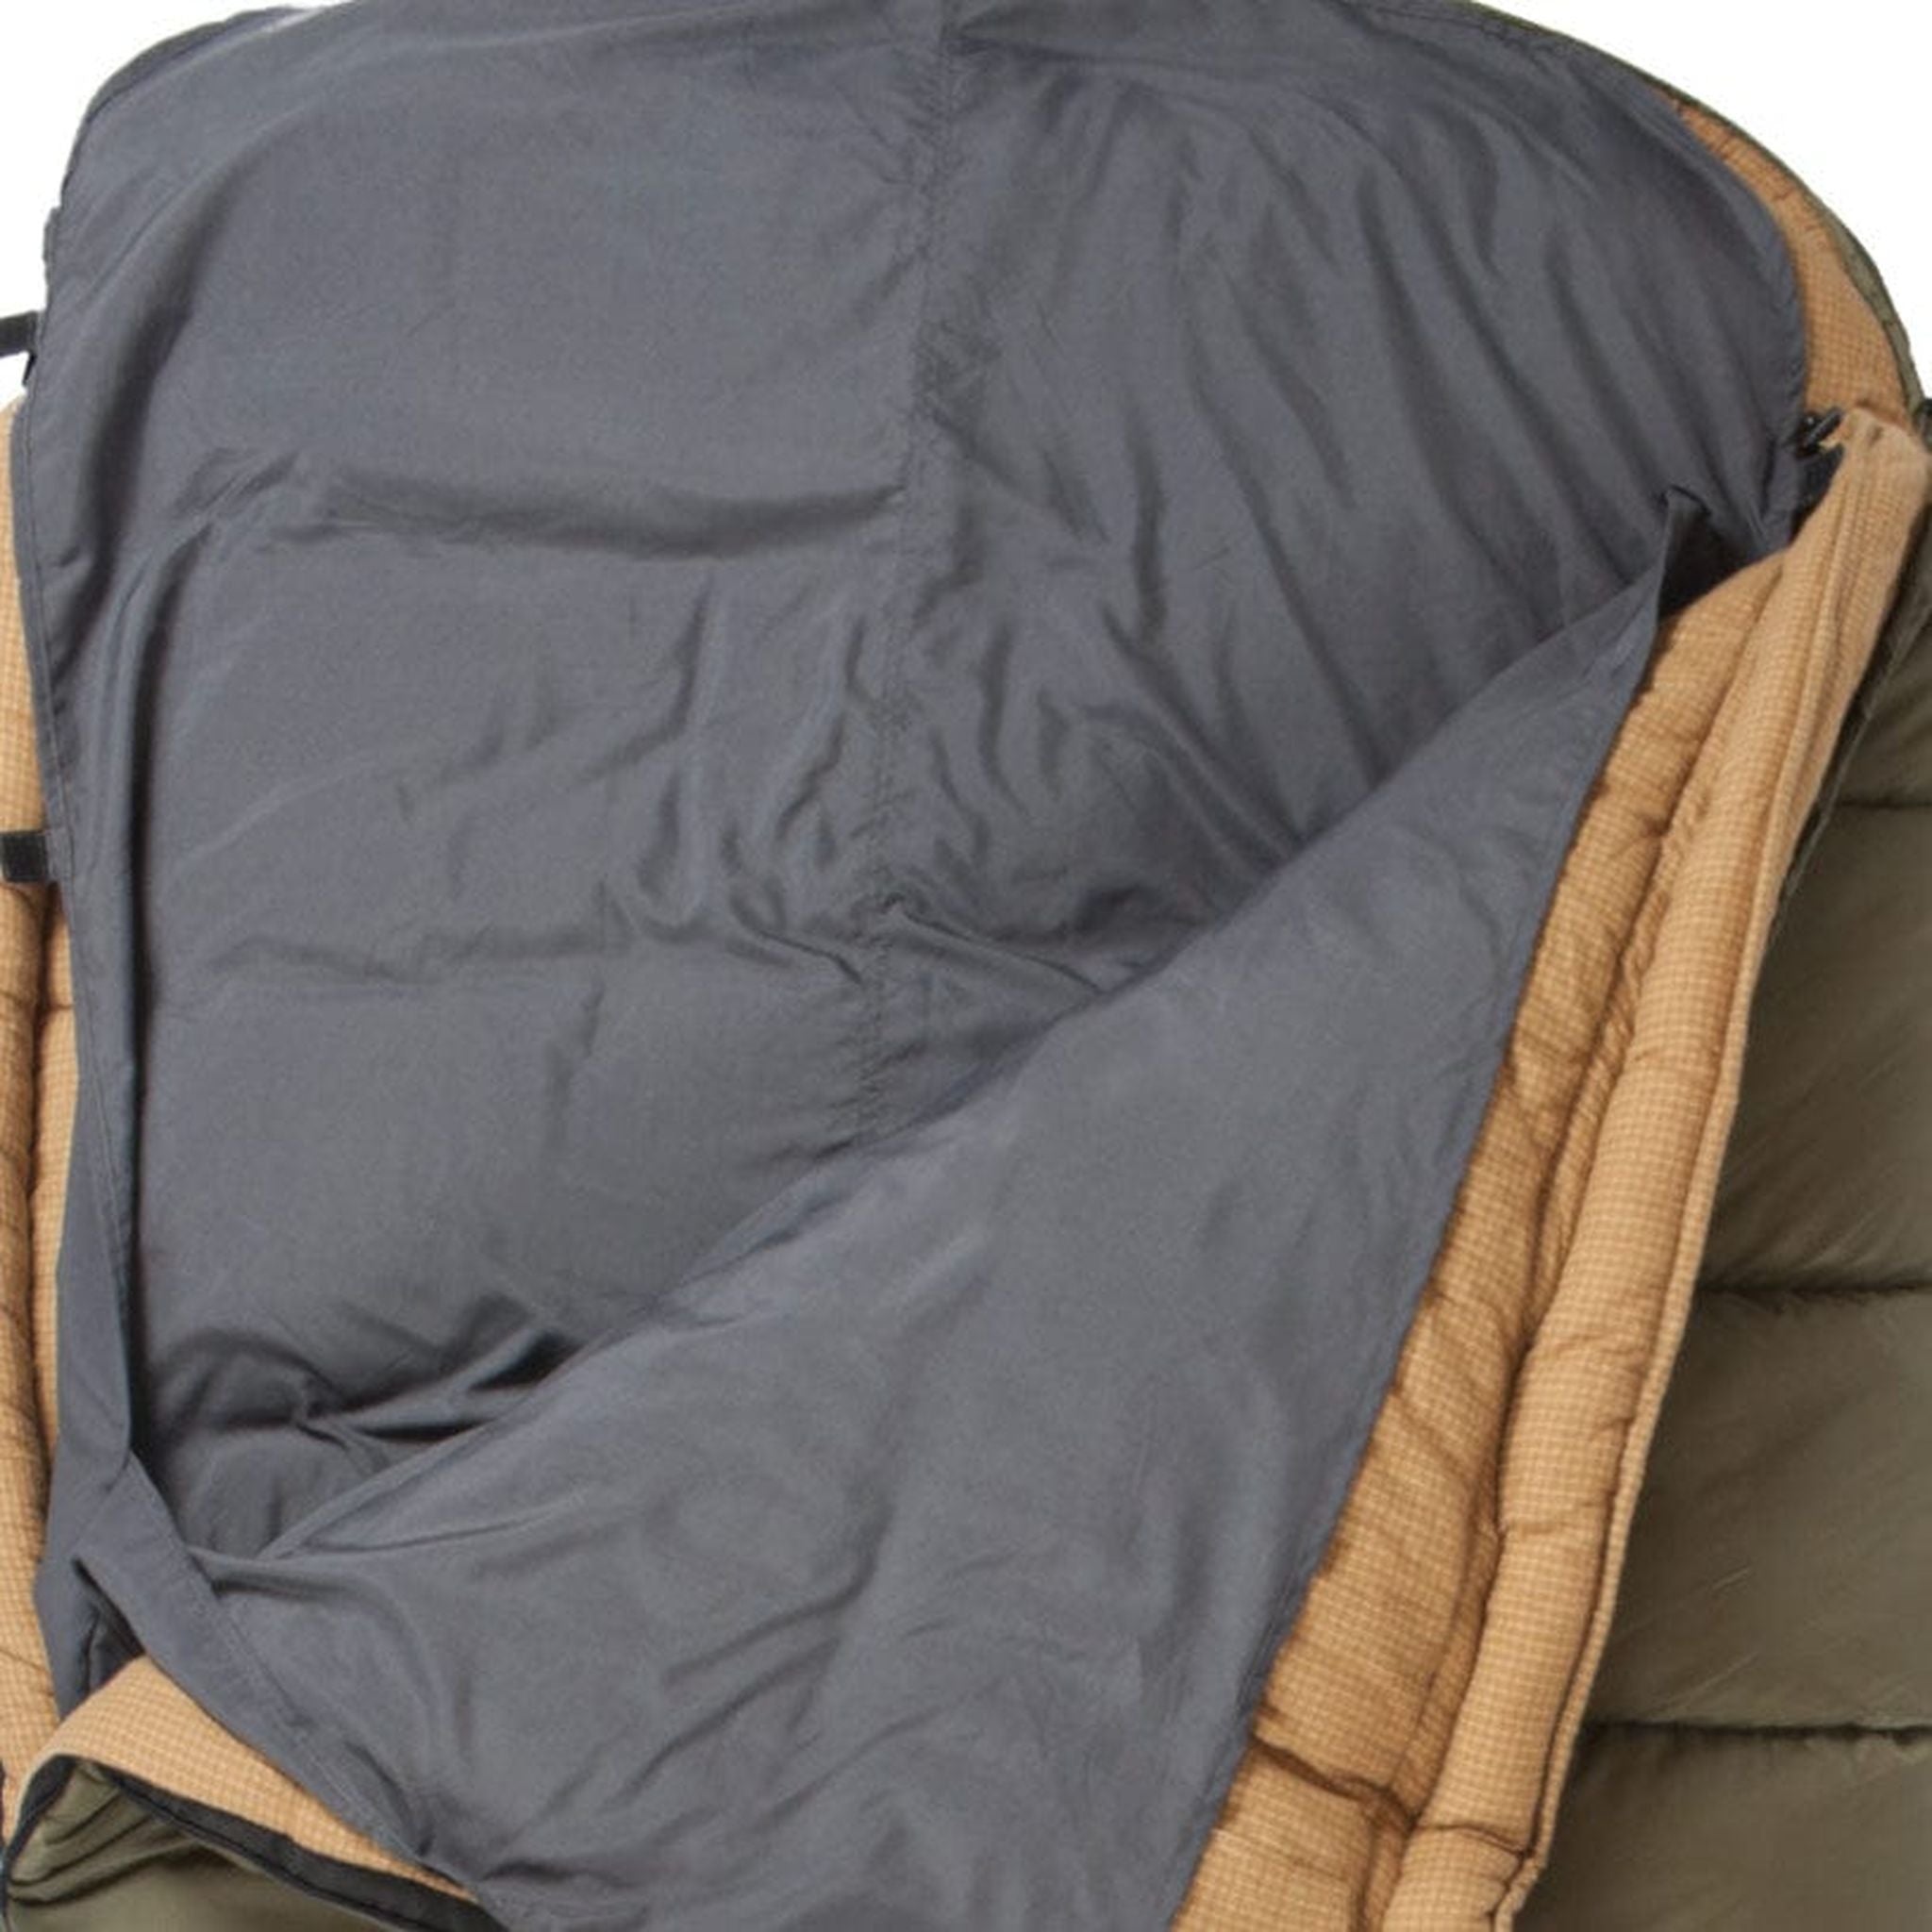 Teton Sports XL Sleeping Bag Liner